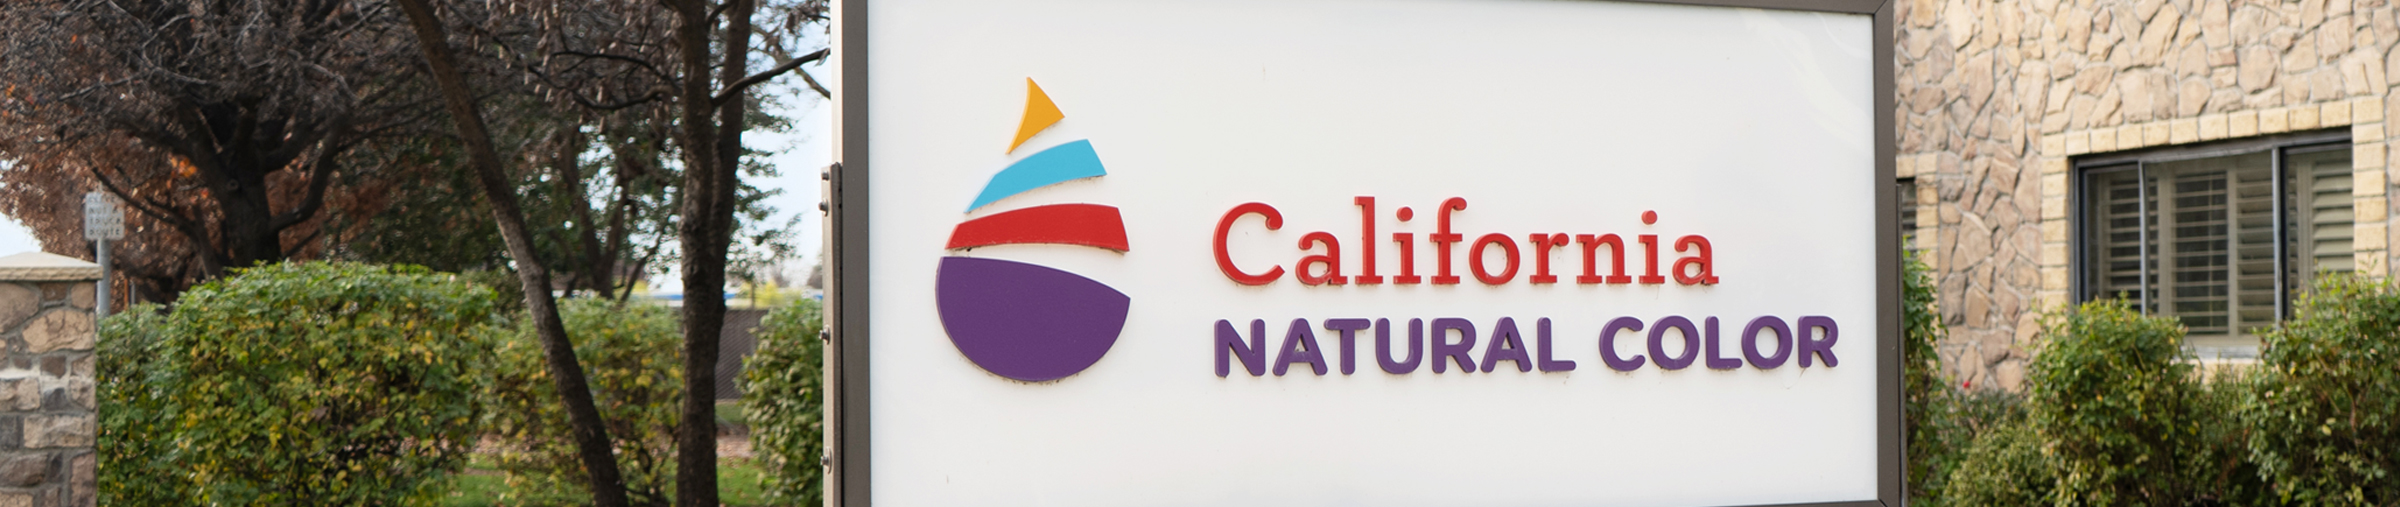 California Natural Color Sign